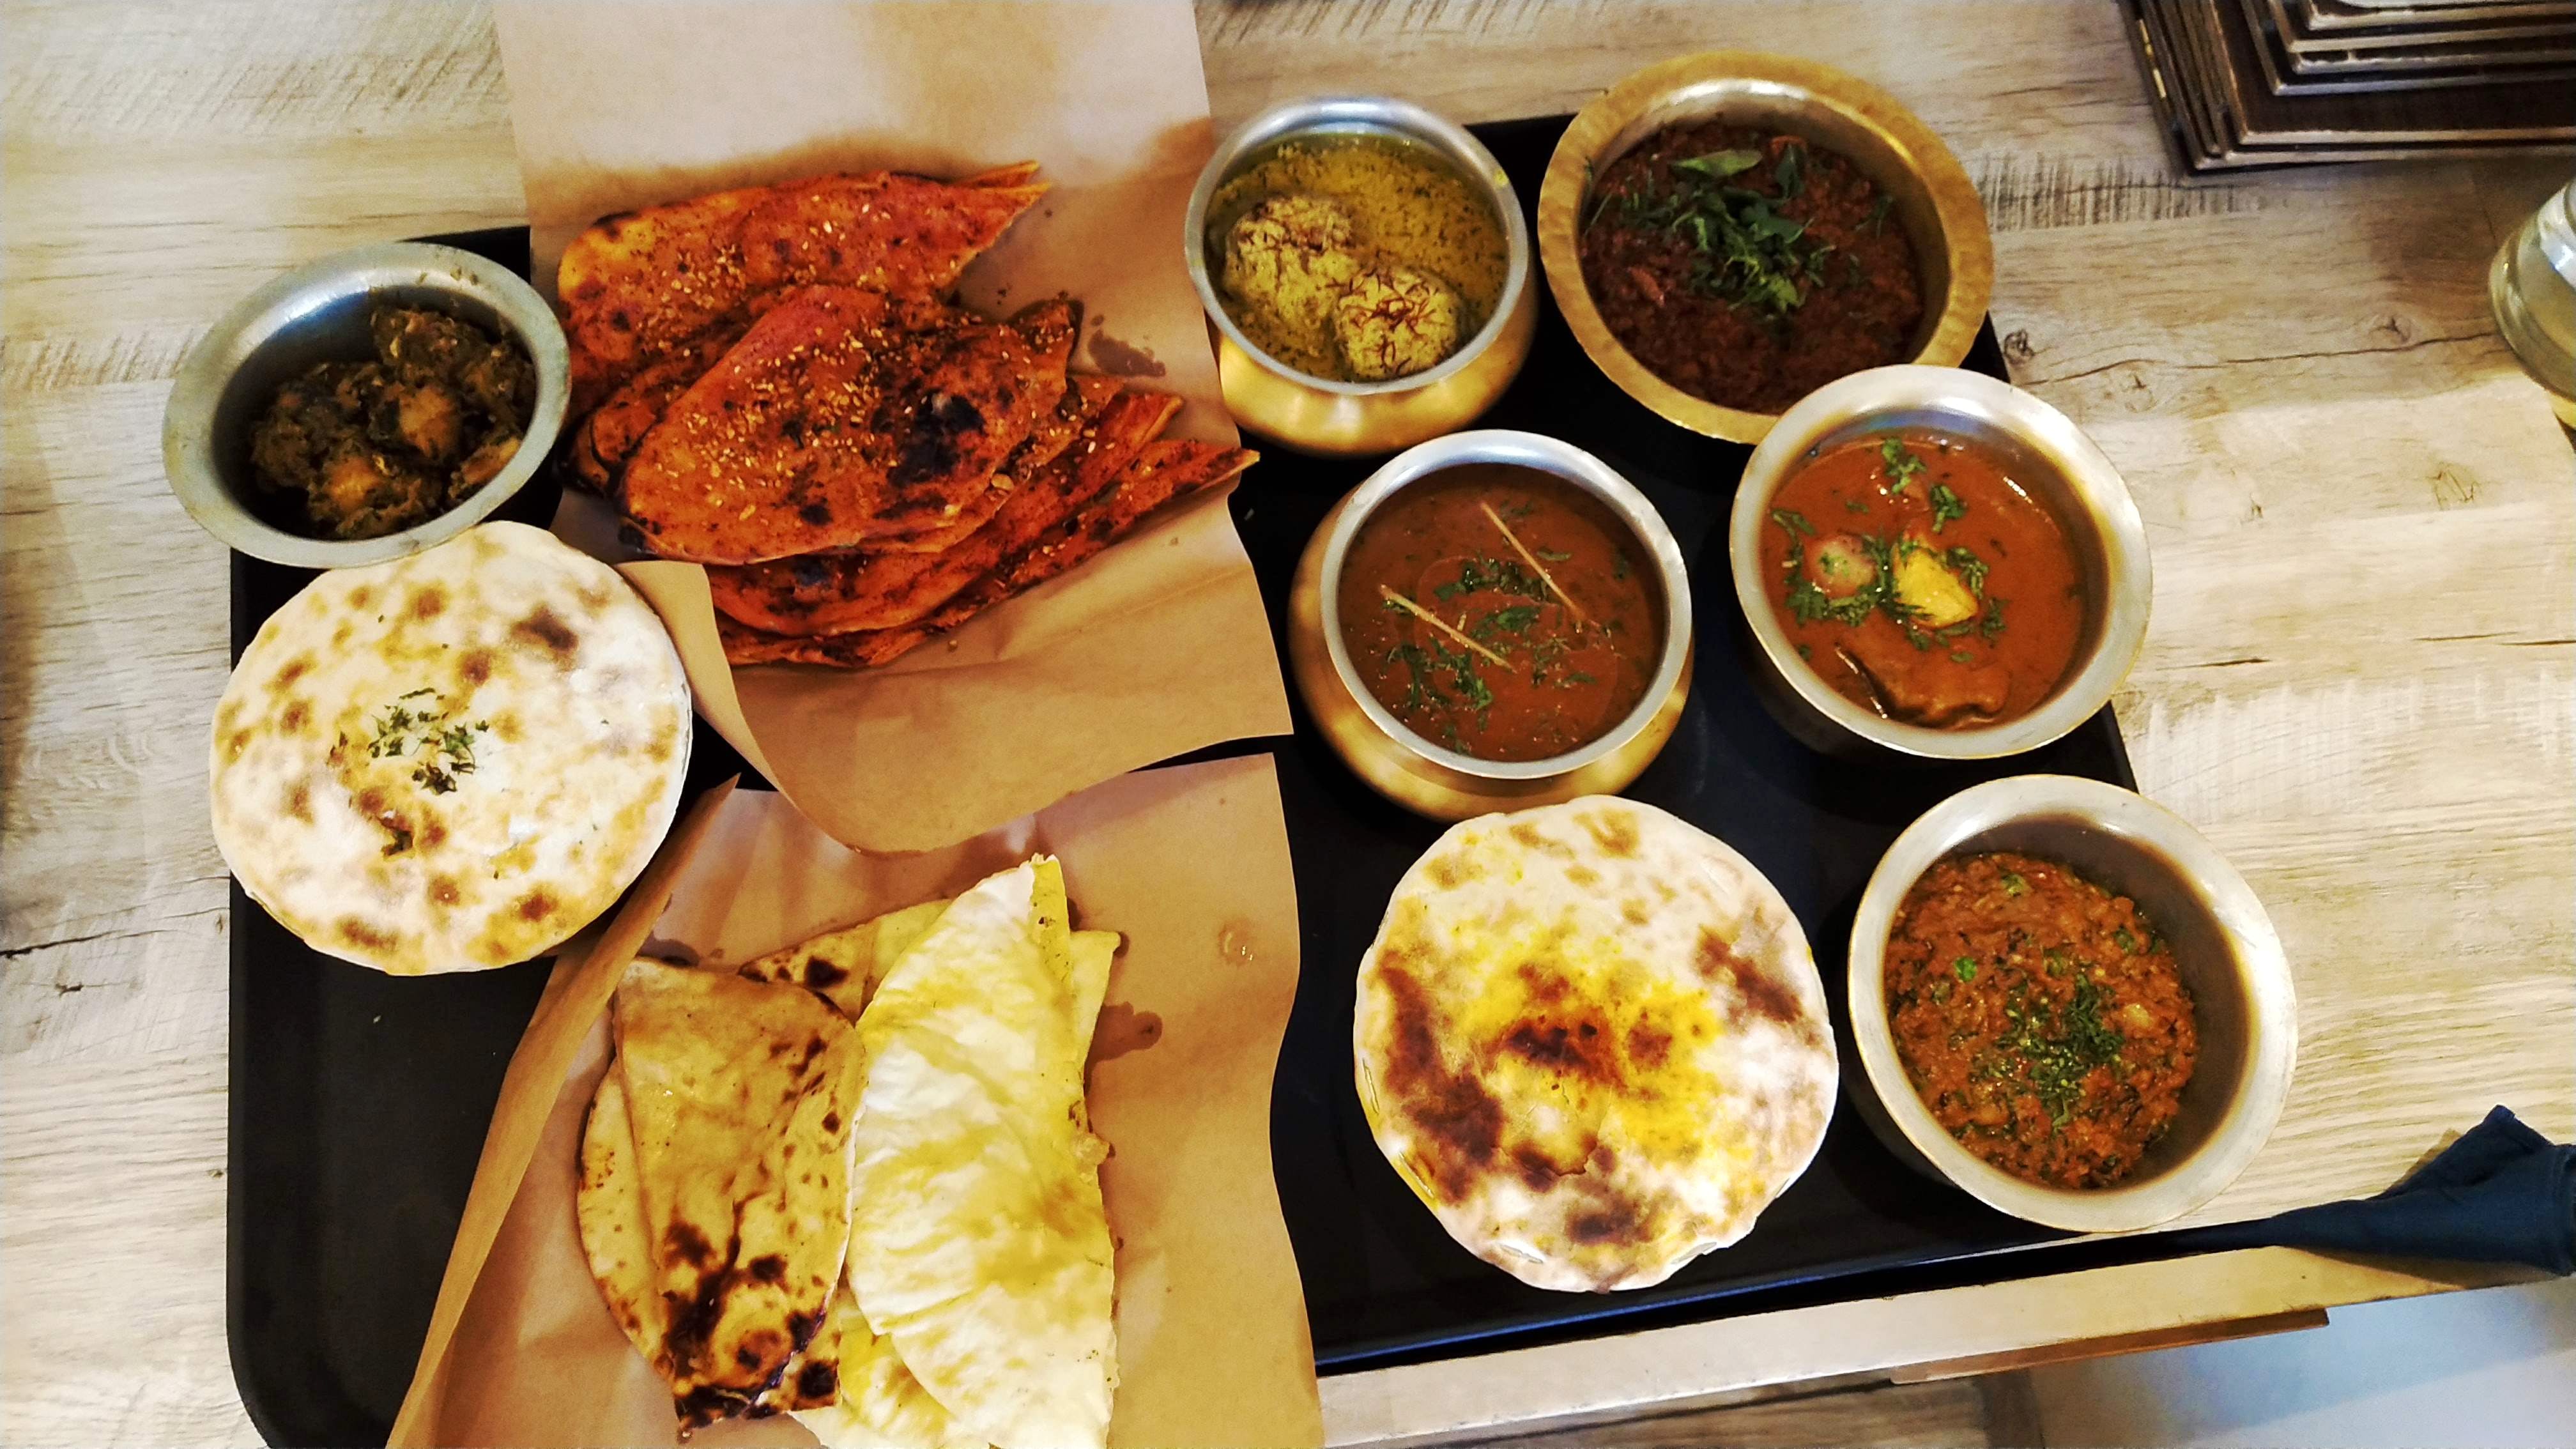 Dish,Food,Cuisine,Ingredient,Meal,Punjabi cuisine,Produce,Indian cuisine,Nepalese cuisine,Maharashtrian cuisine